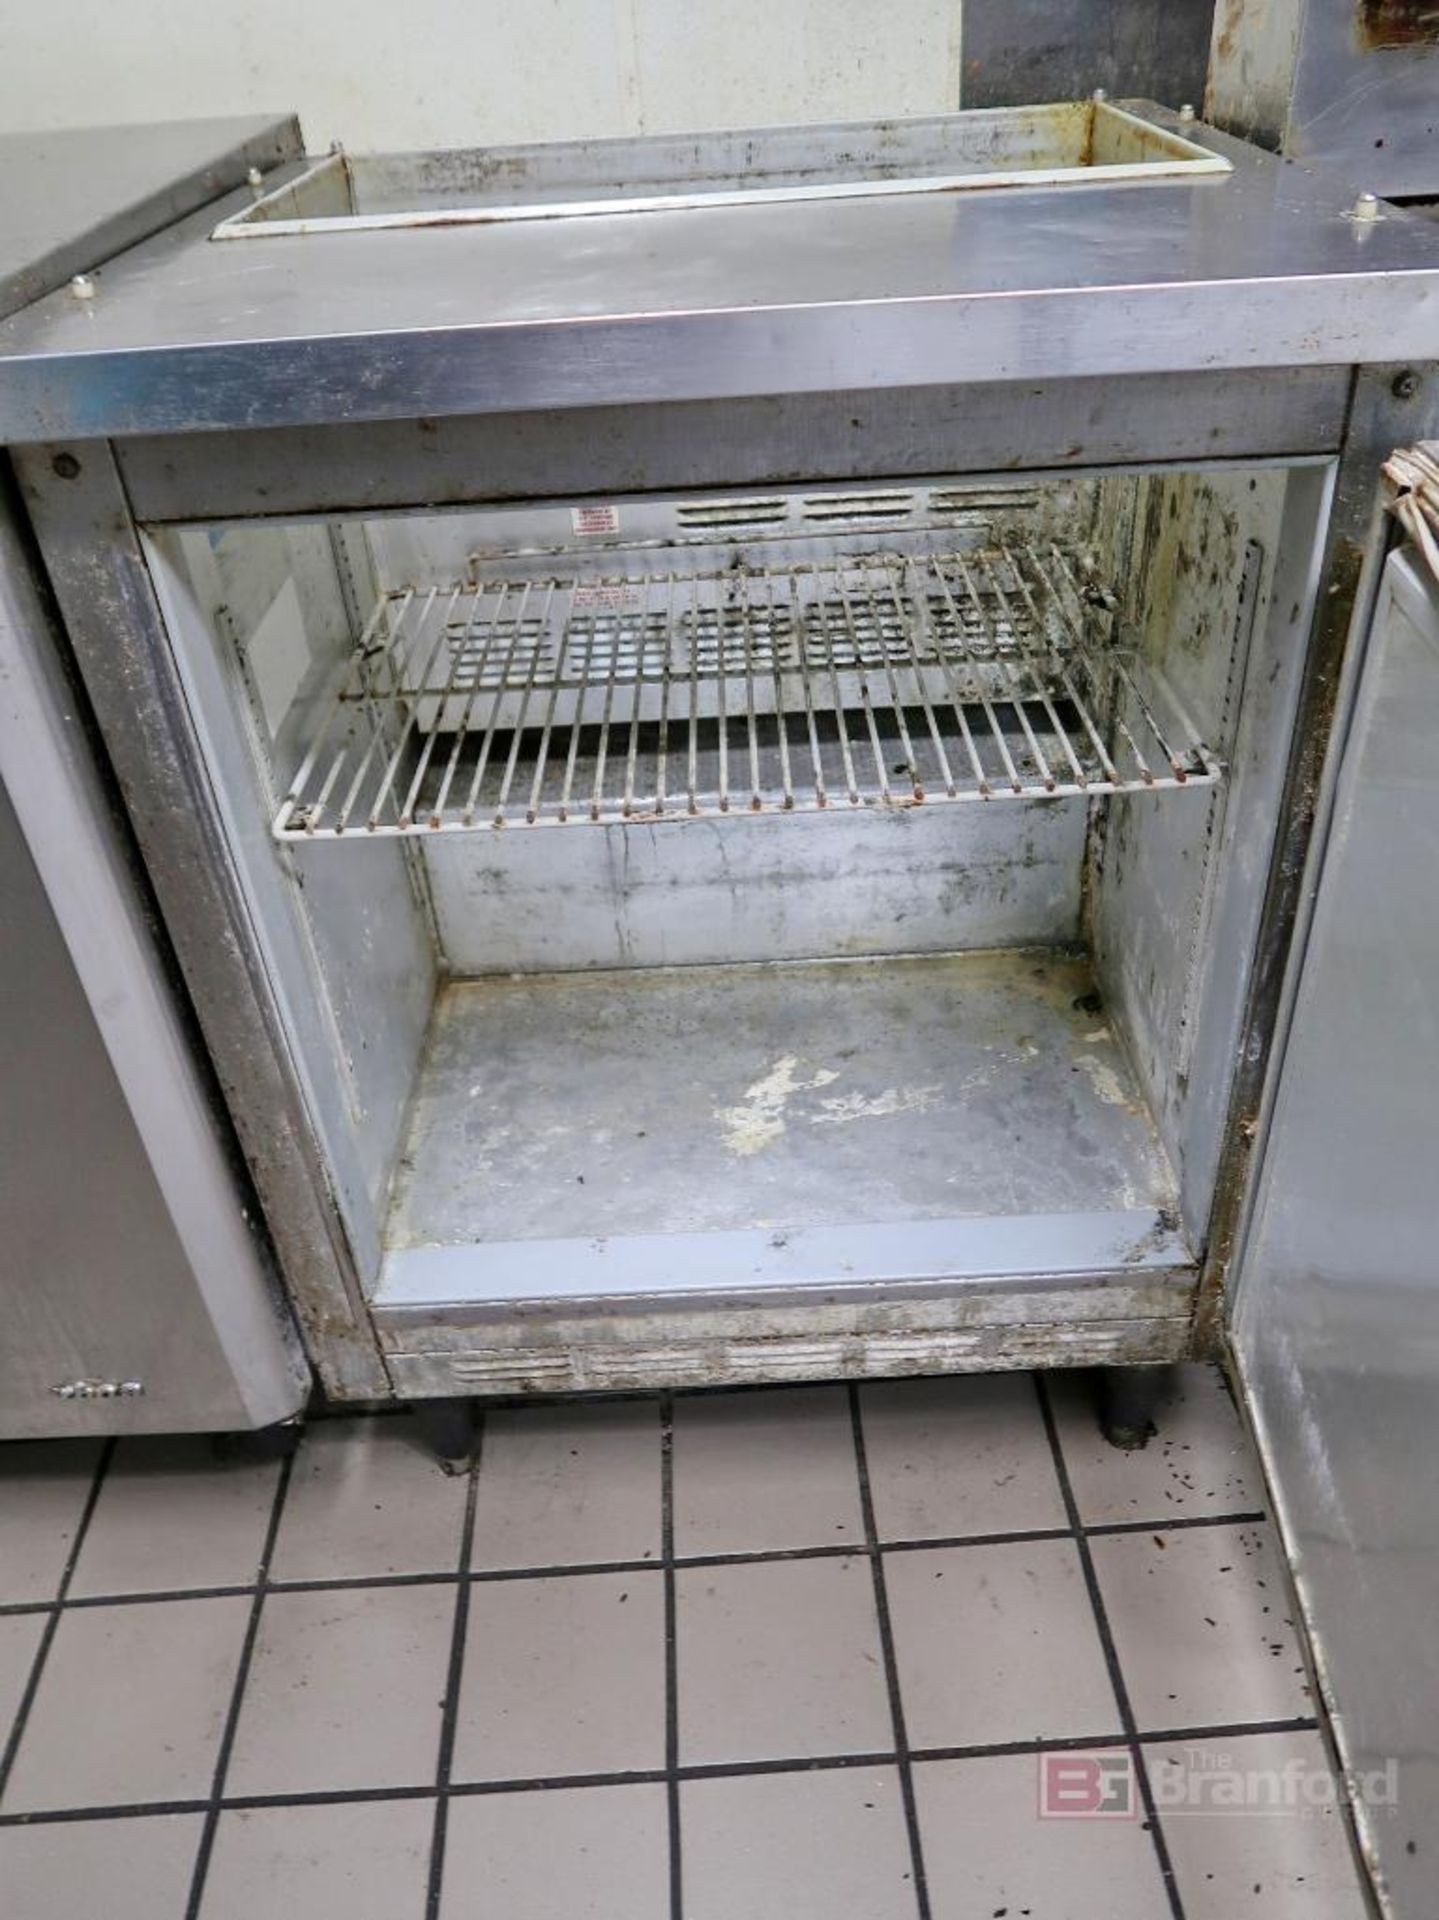 Beverage Air Sandwich Prep Unit Refrigerator - Image 2 of 4